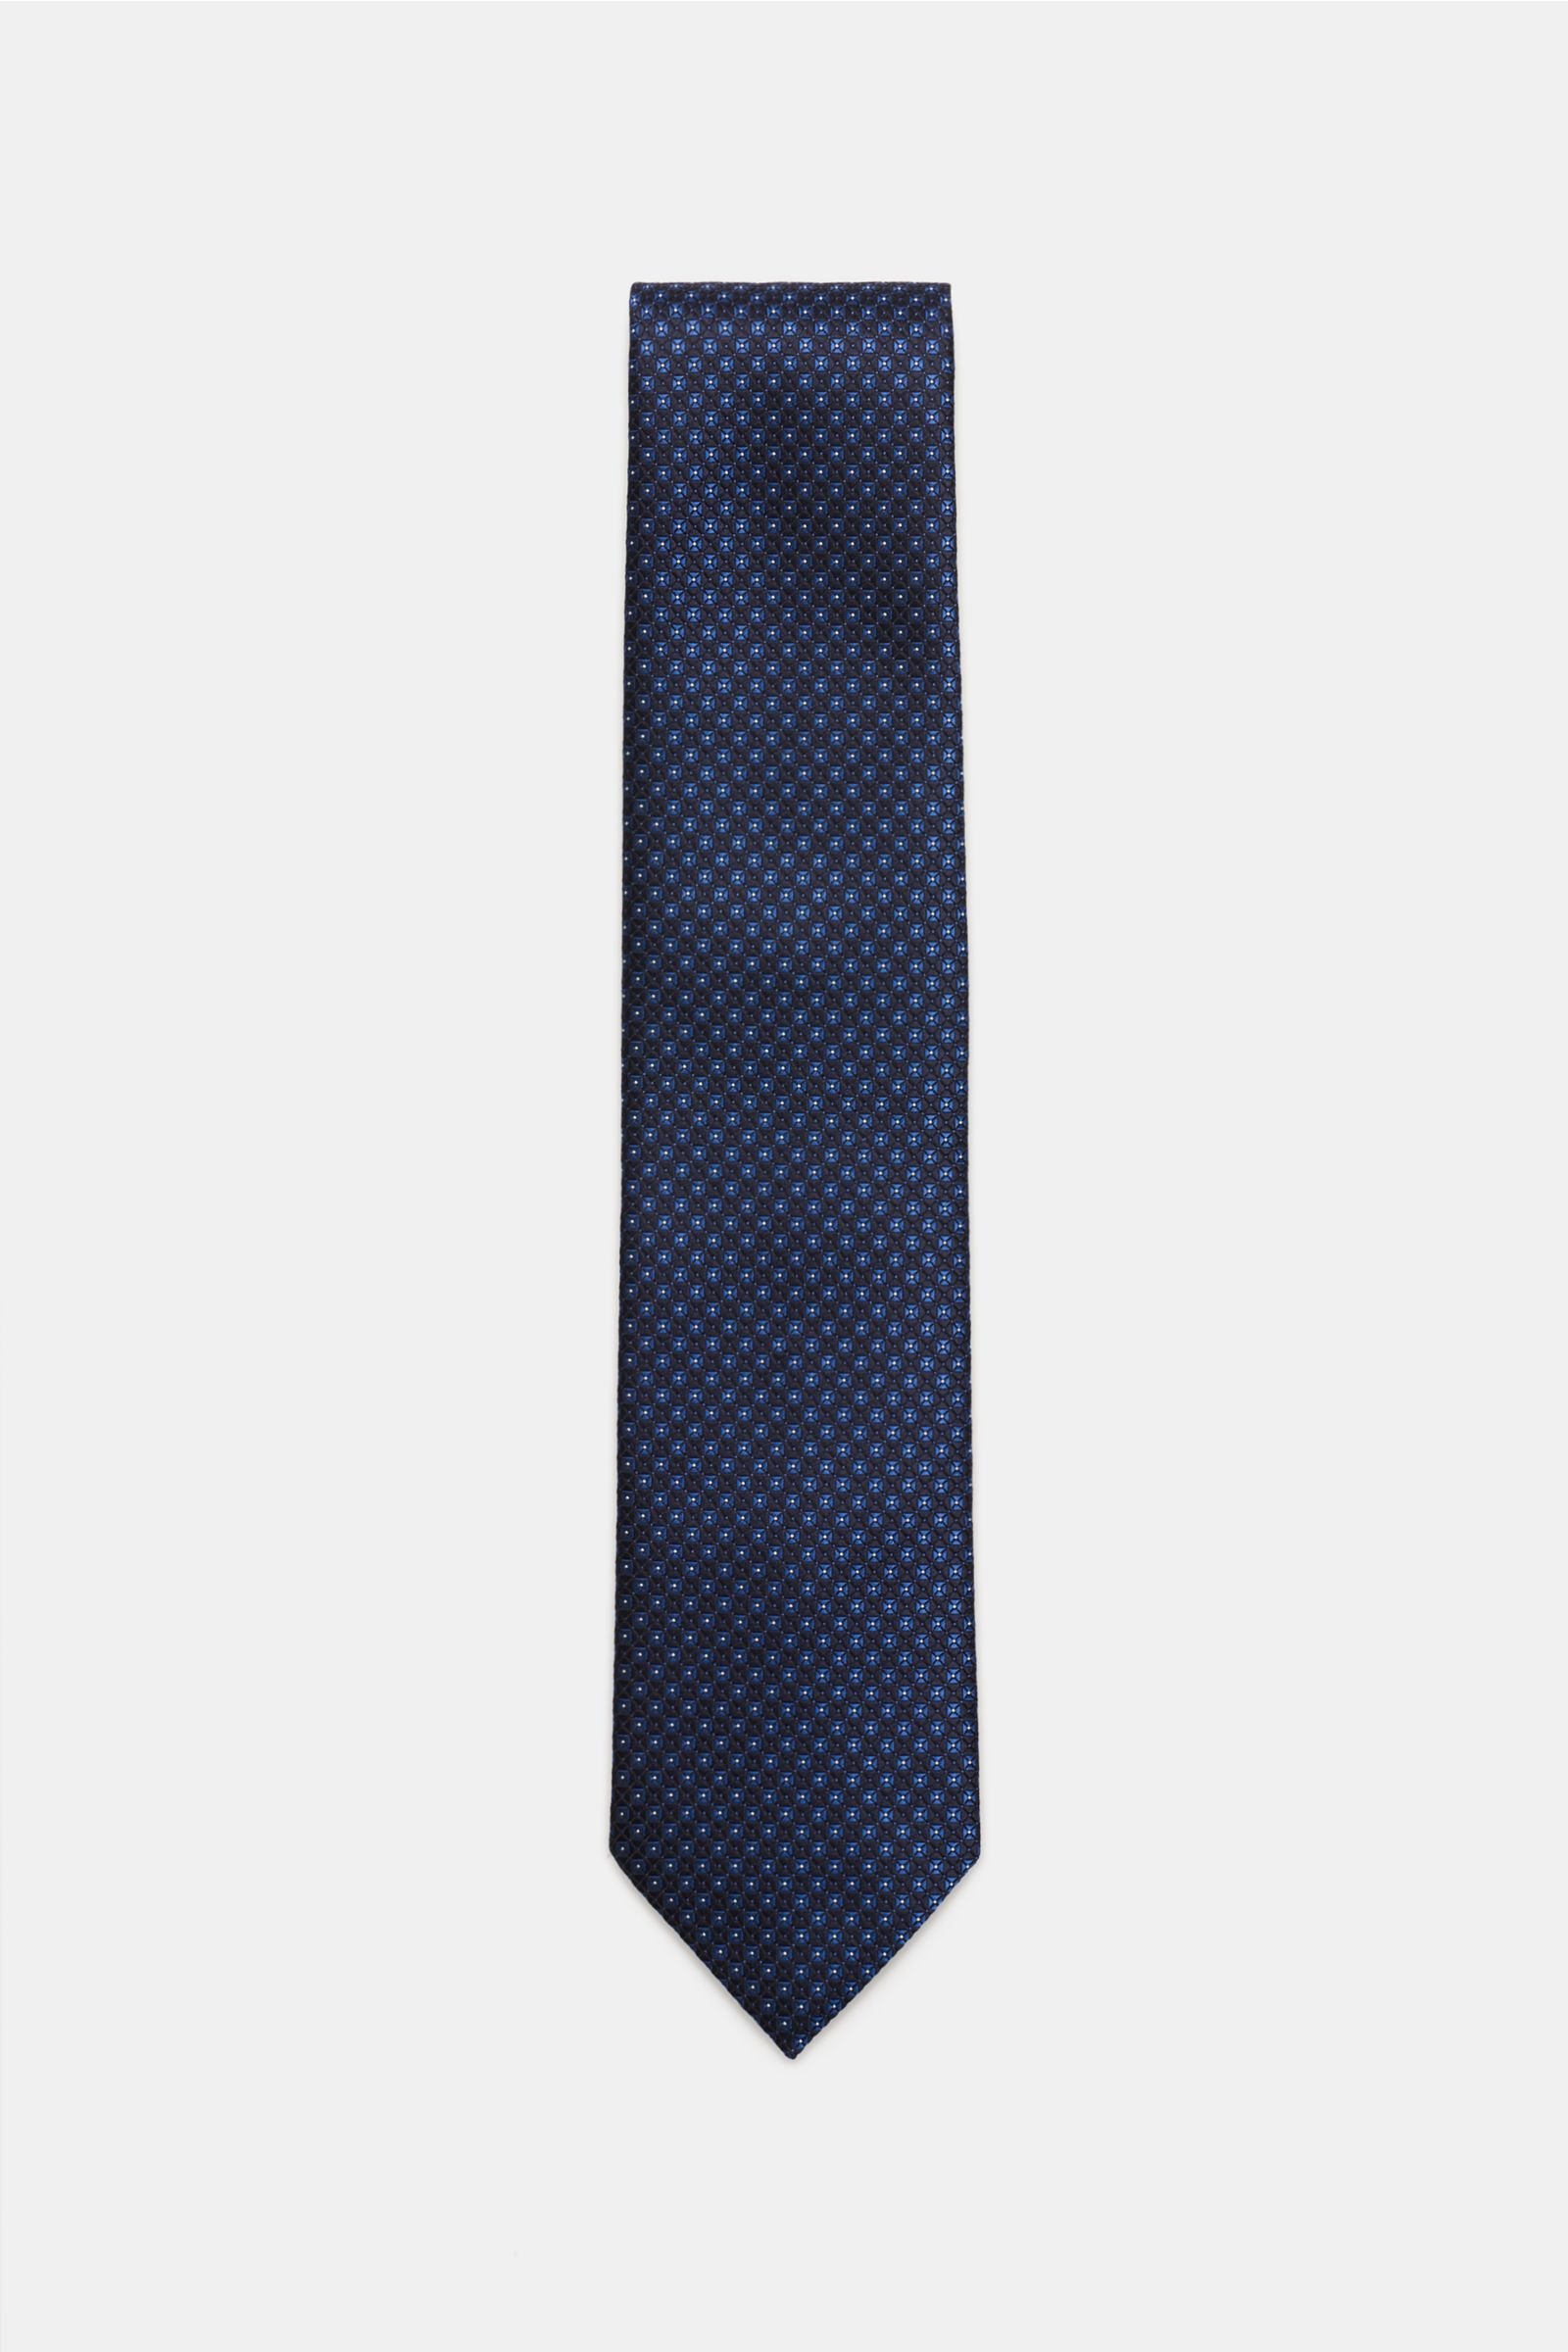 Silk tie blue/navy patterned